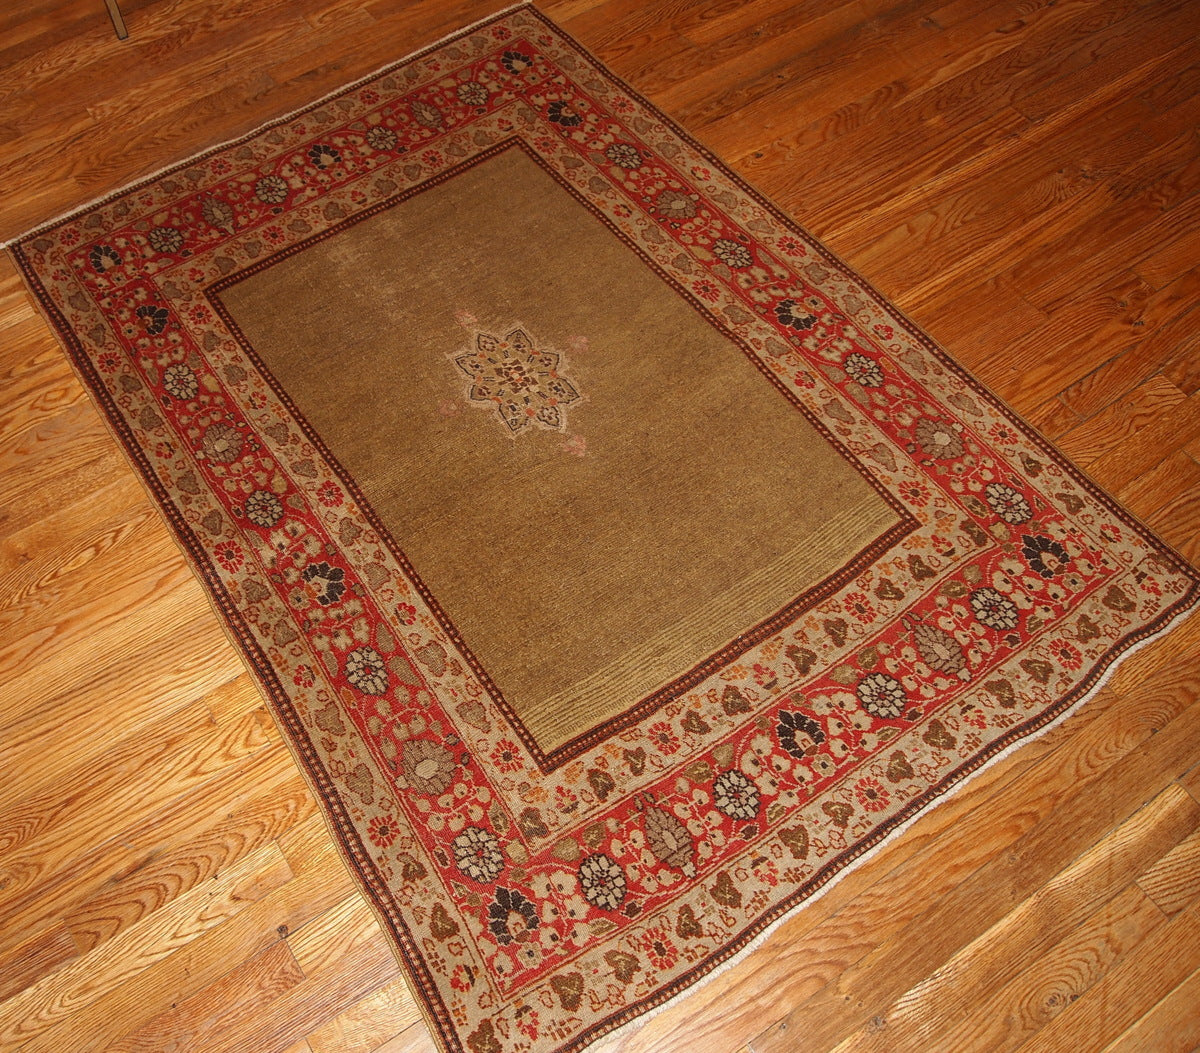 Handmade antique Persian Tabriz rug 3.10' x 5.5' (121cm x 167cm) 1900s - 1B152